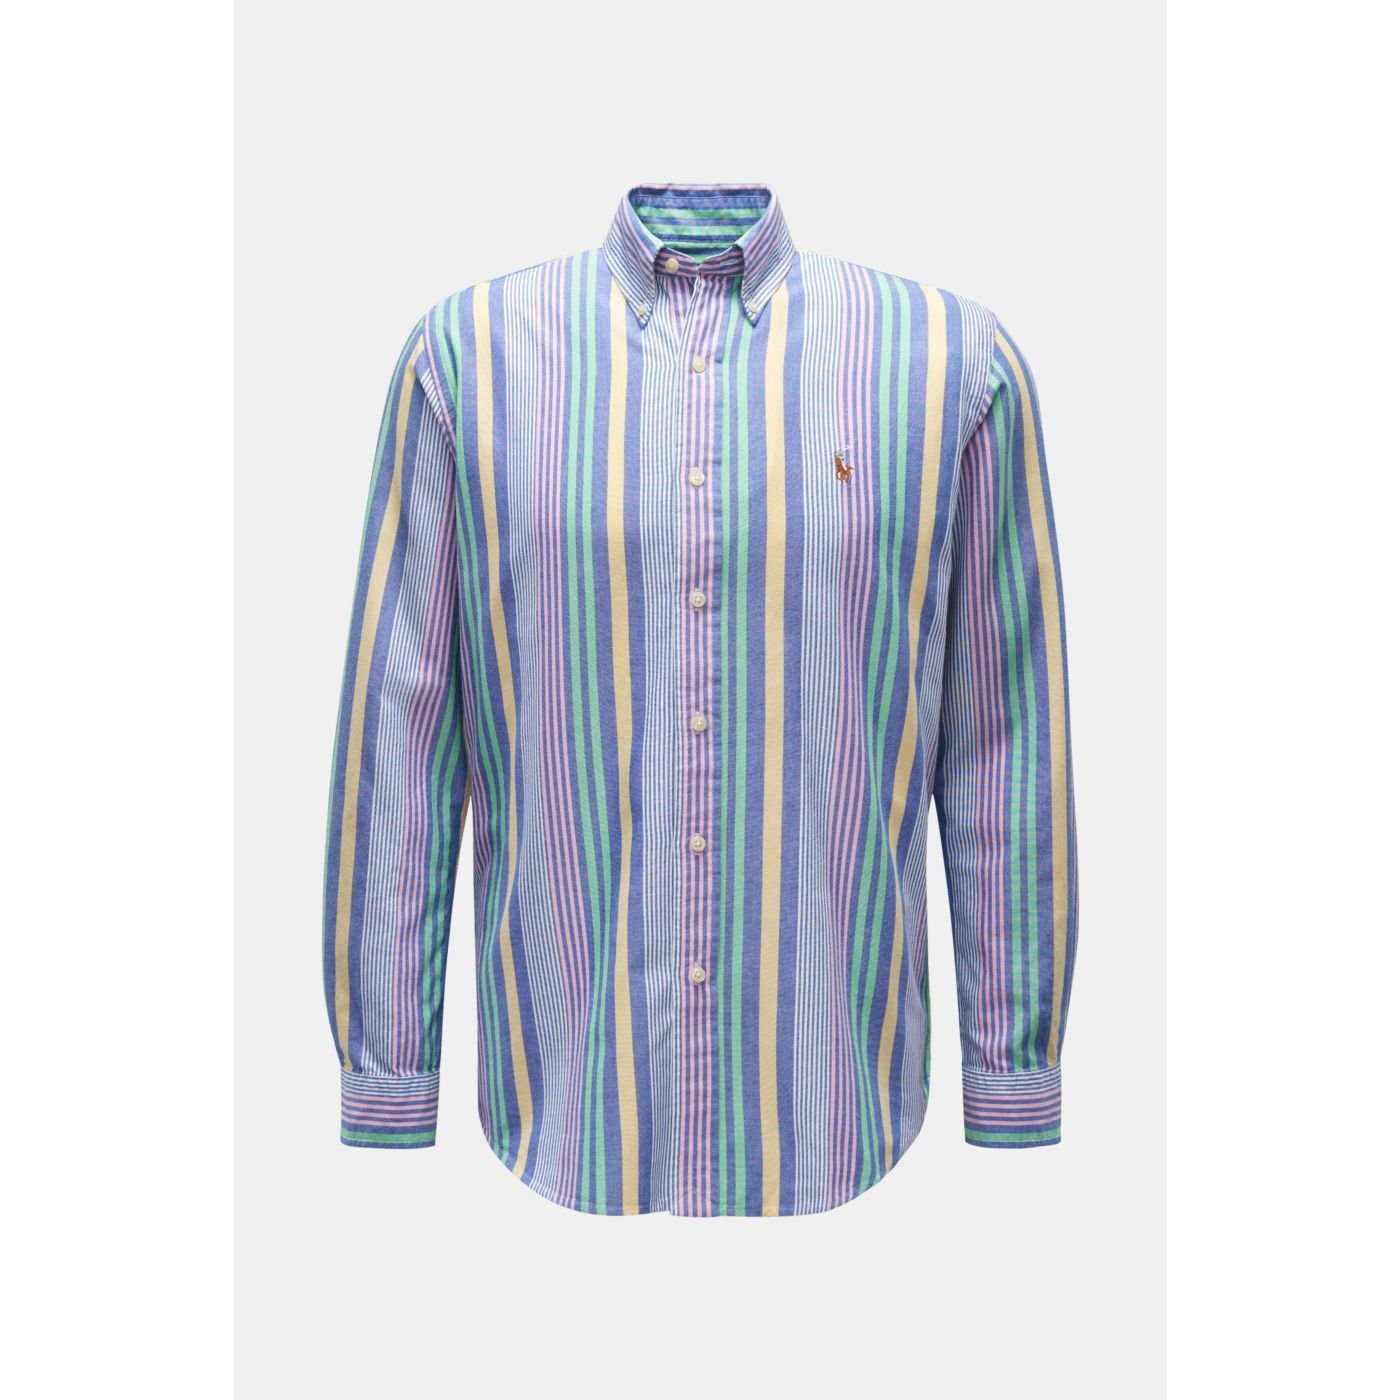 POLO RALPH LAUREN casual shirt button-down collar grey-blue